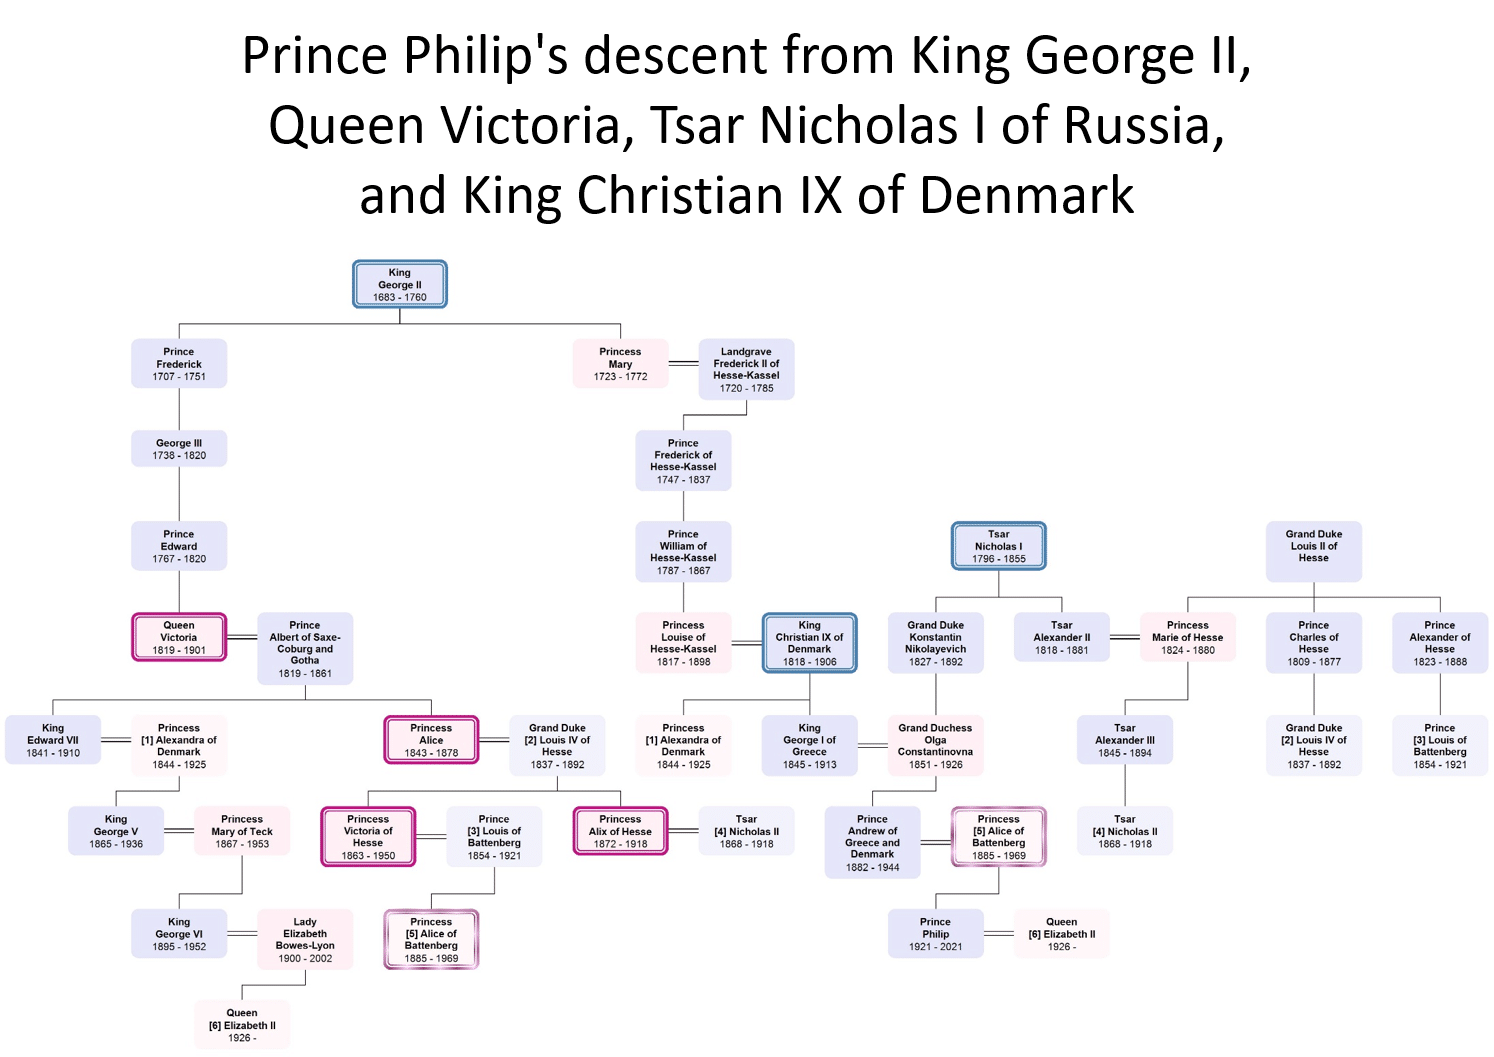 Caroline’s slide illustrating Prince Philip’s royal family connections